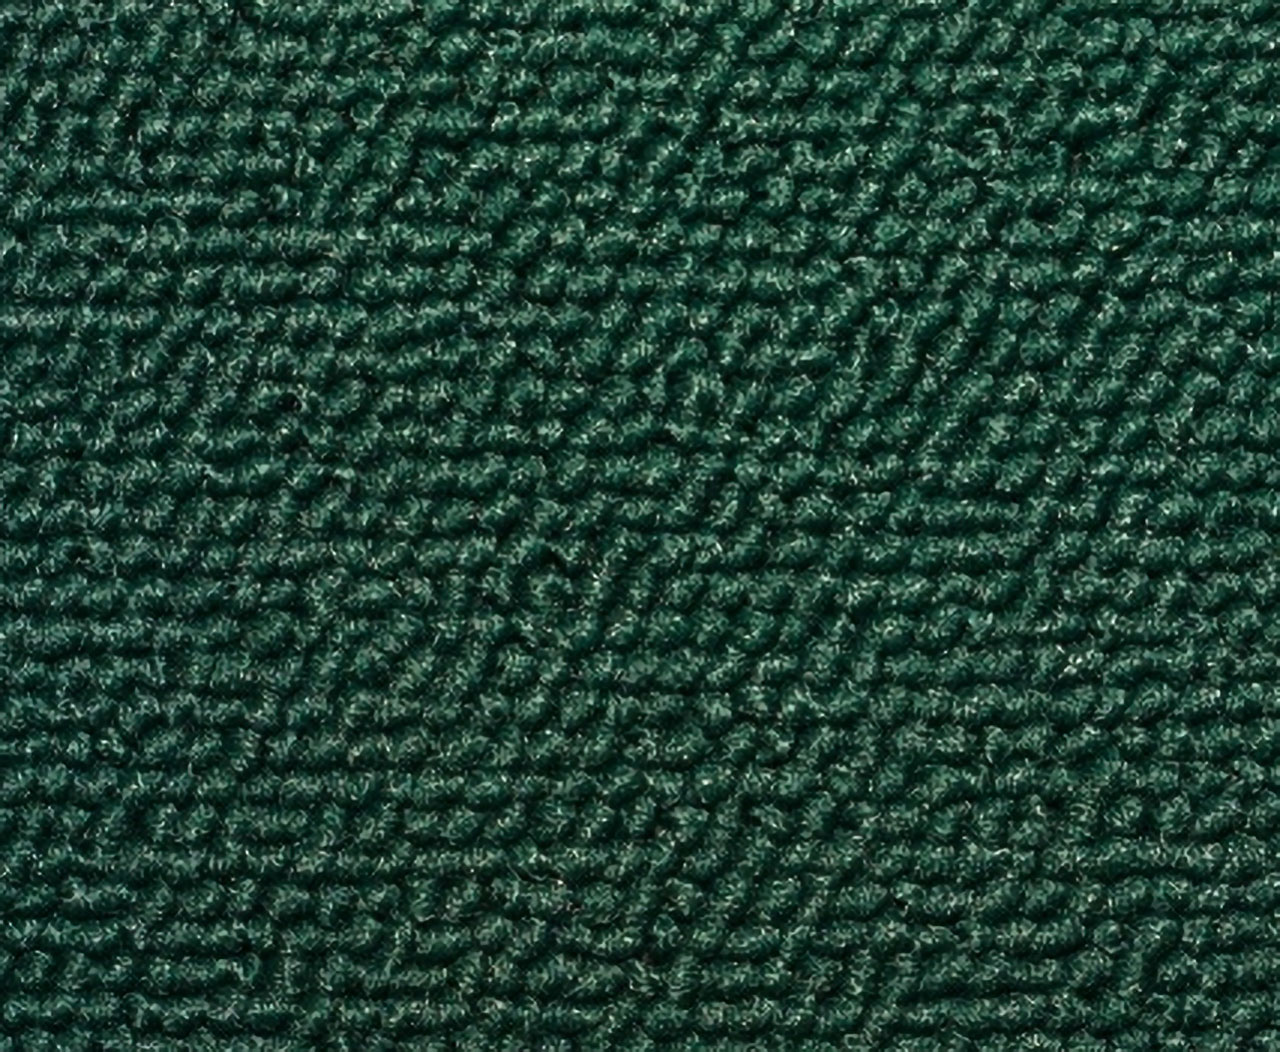 Holden Standard HR Standard Wagon E51 Opera Green Carpet (Image 1 of 1)